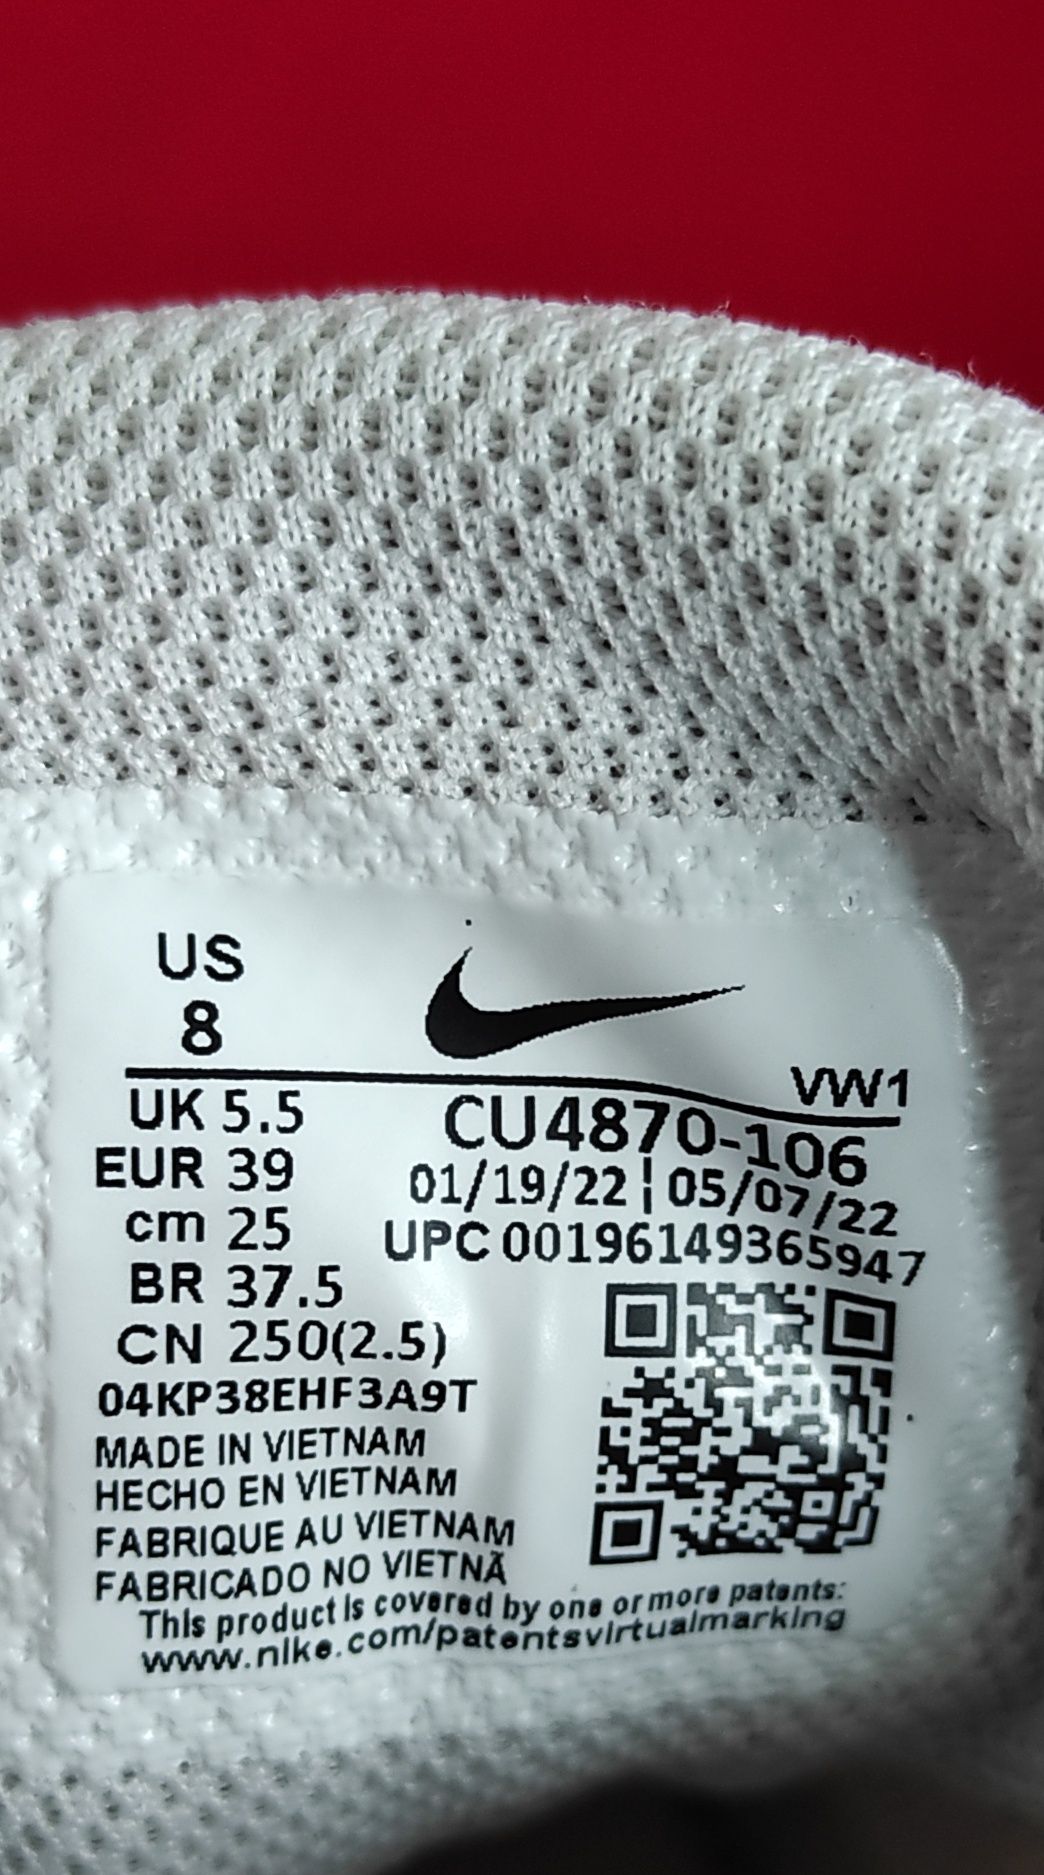 Nike Air Max AP rozmiar 39 (25 cm)